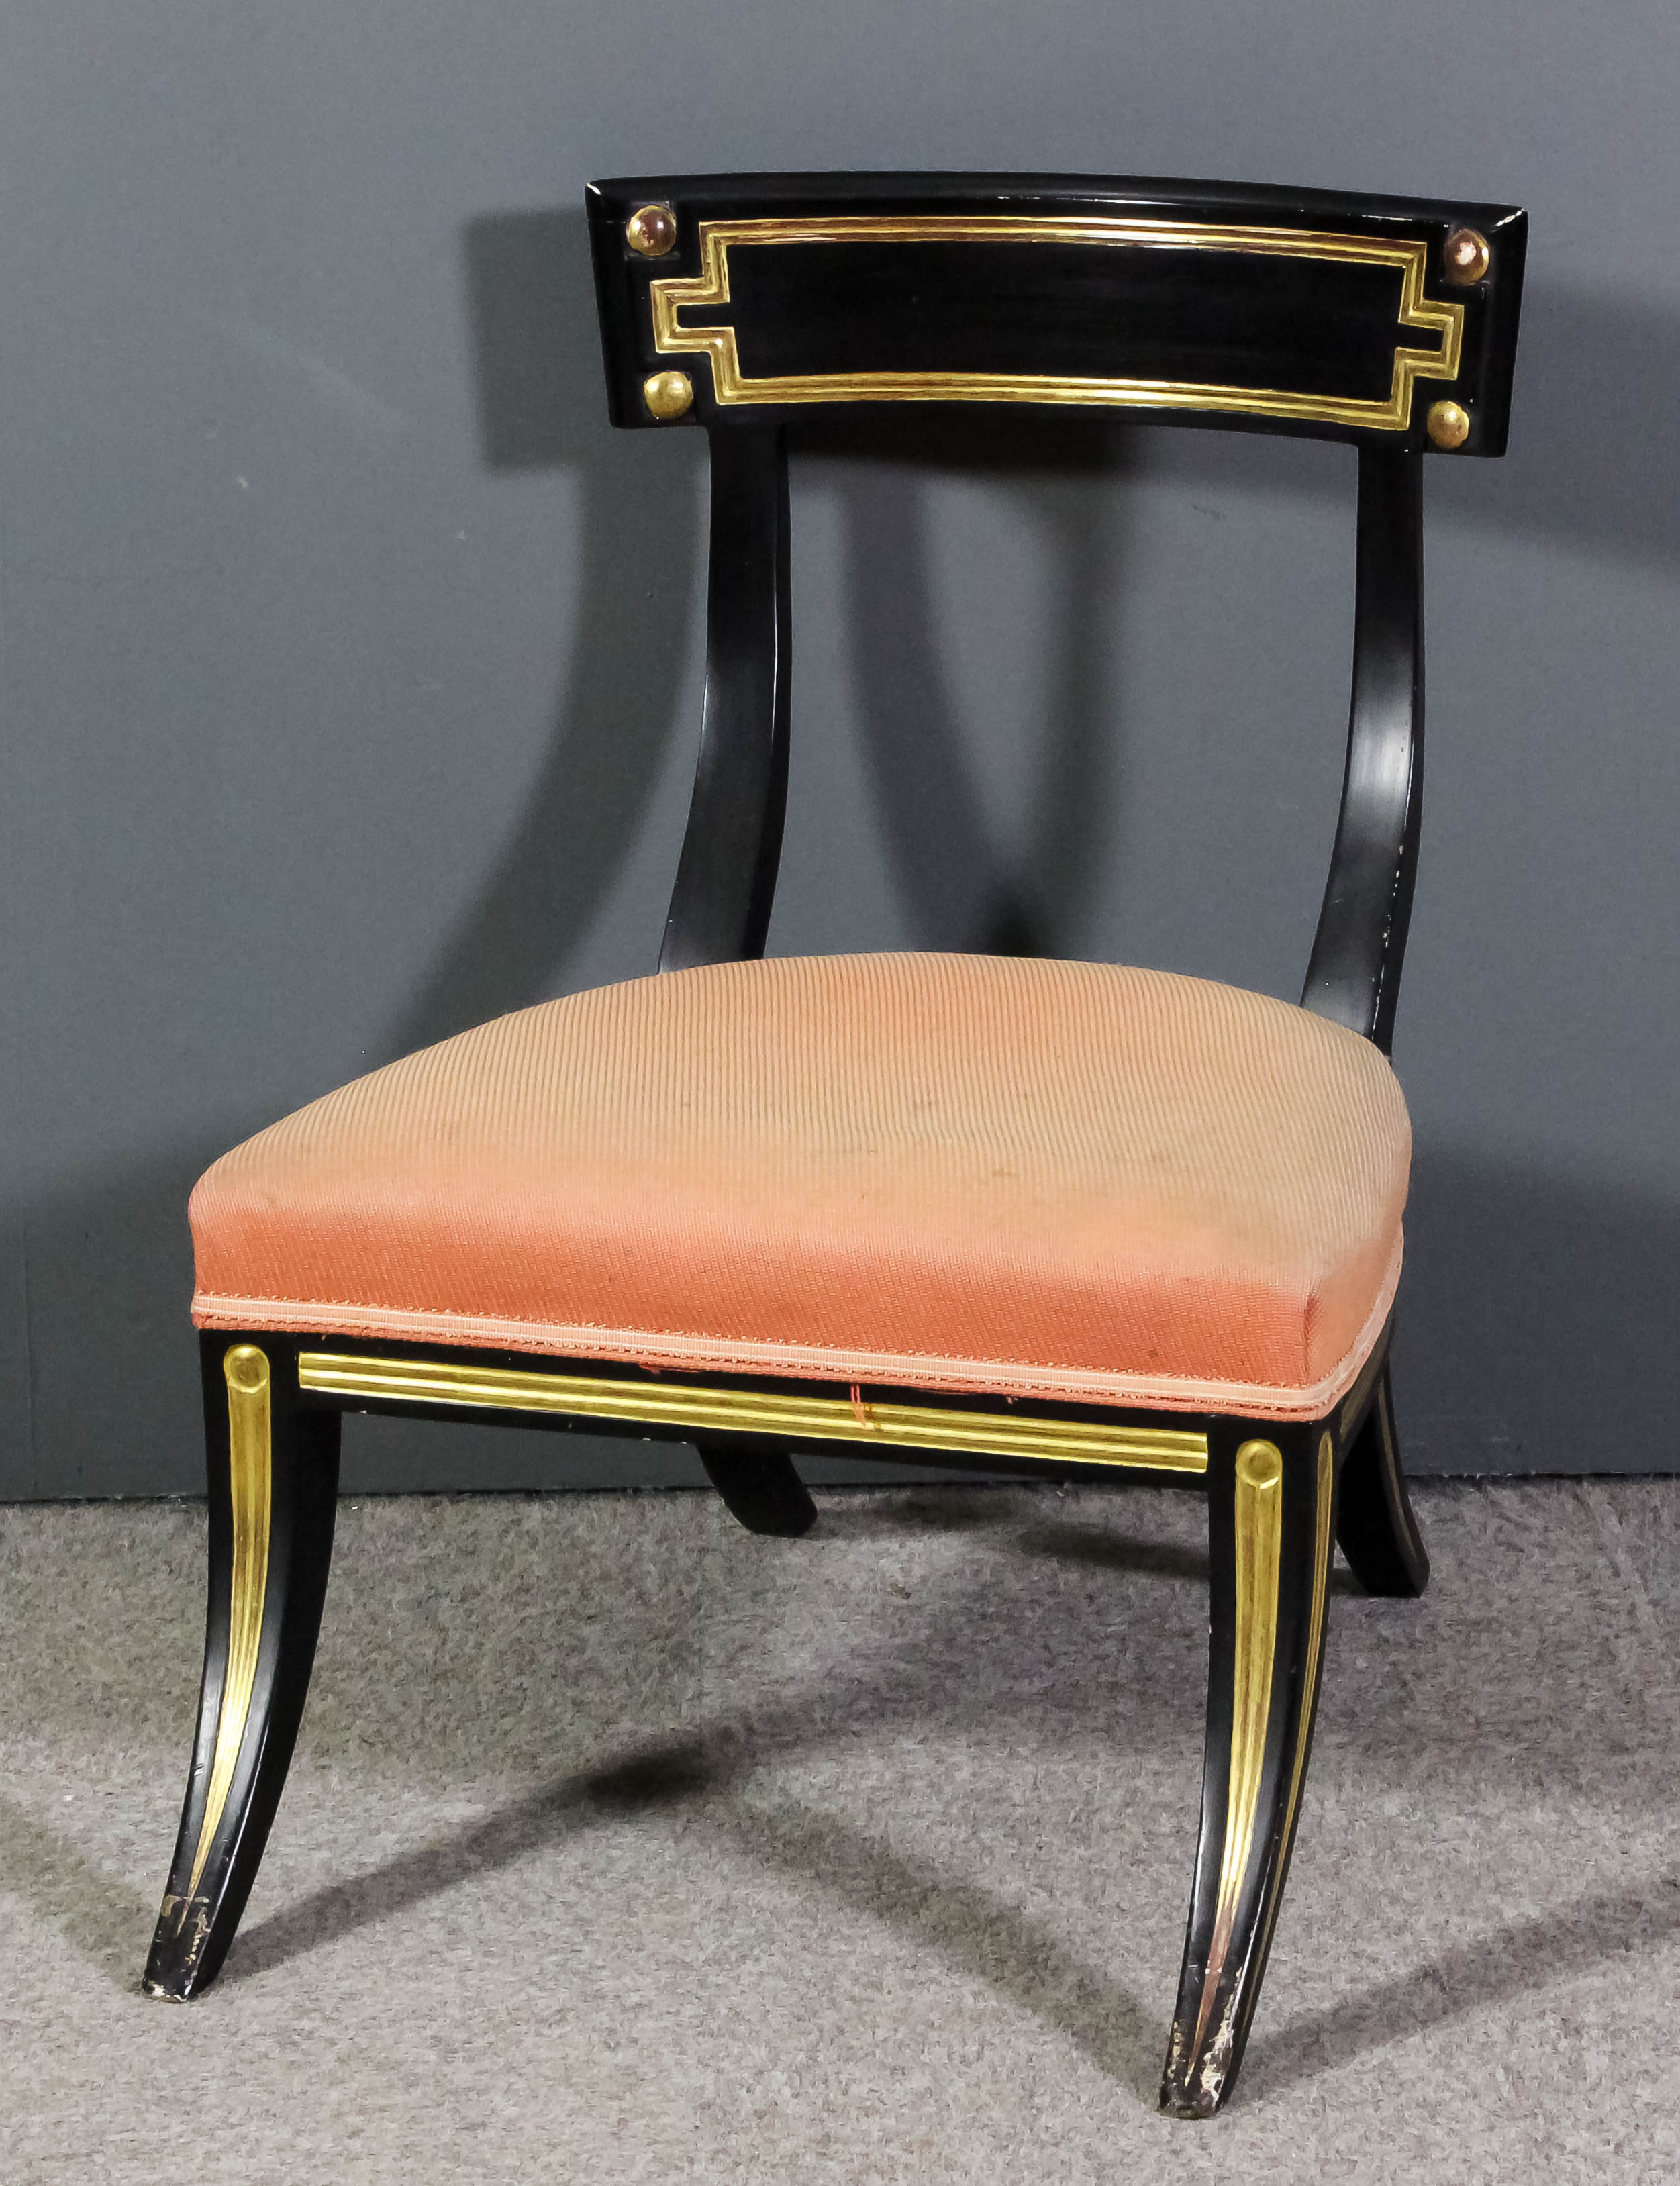 A 19th Century ebonised and parcel gilt "Klismos" nursing chair with deep curved crest rail, the